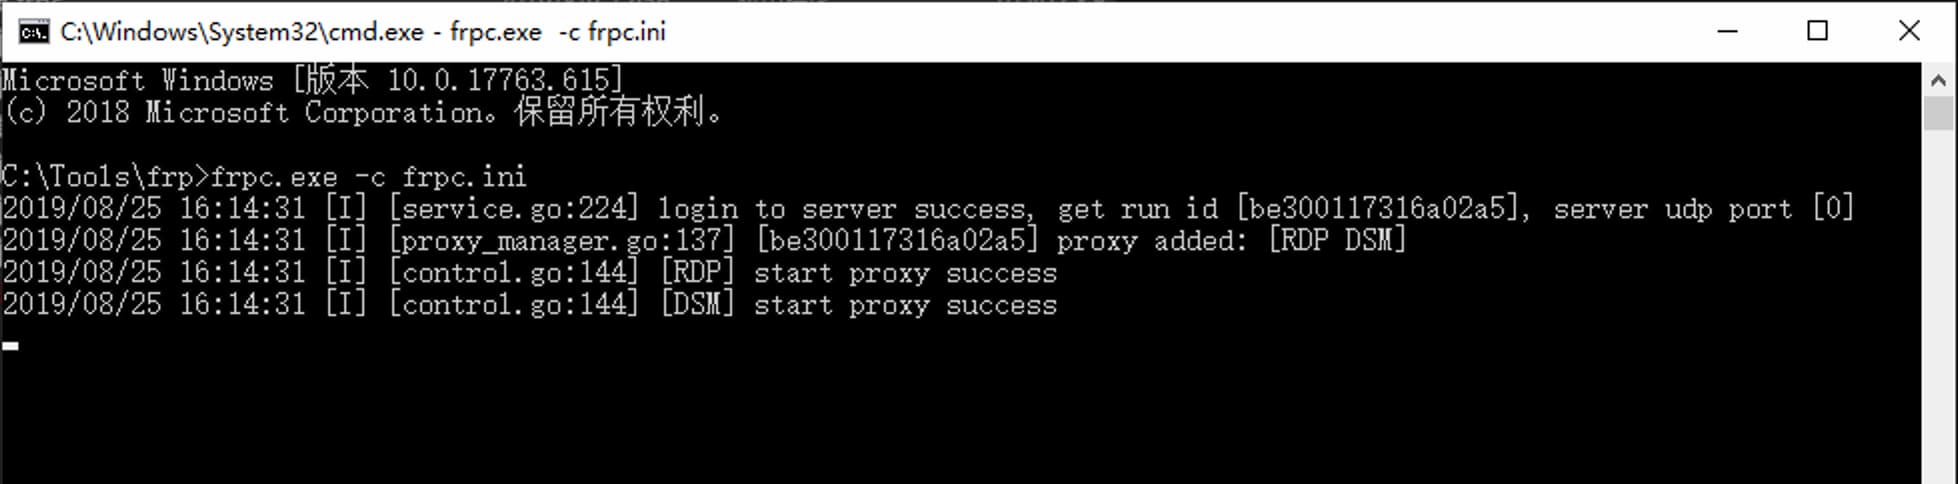 EasyService - 让程序以 Windows 系统服务的方式，无窗口运行 2